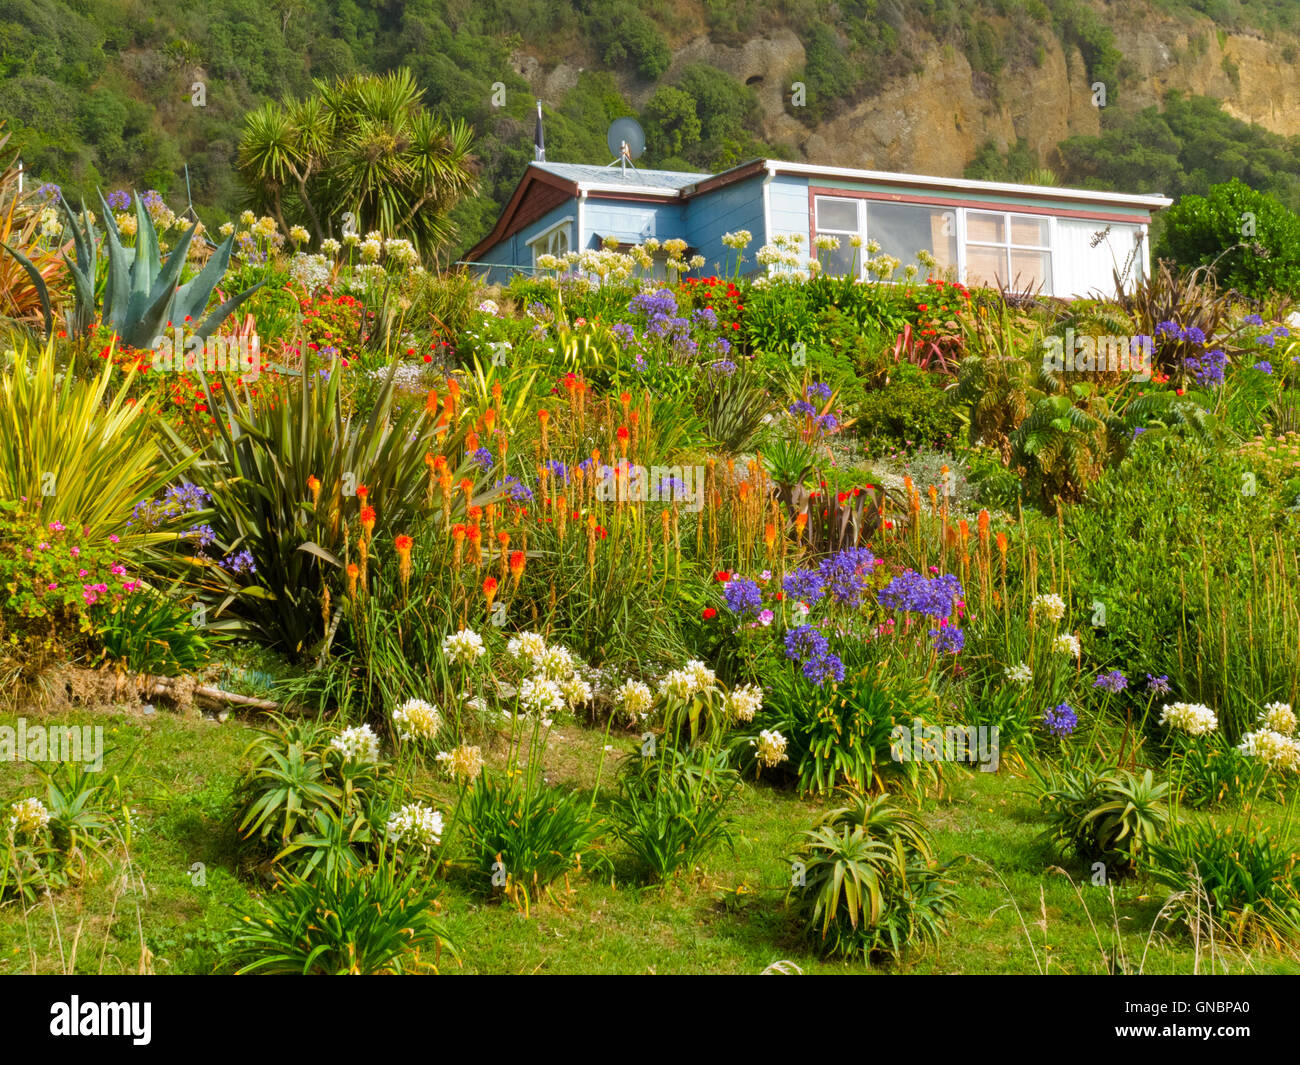 Rural dream house in lush flowering natural garden Stock Photo